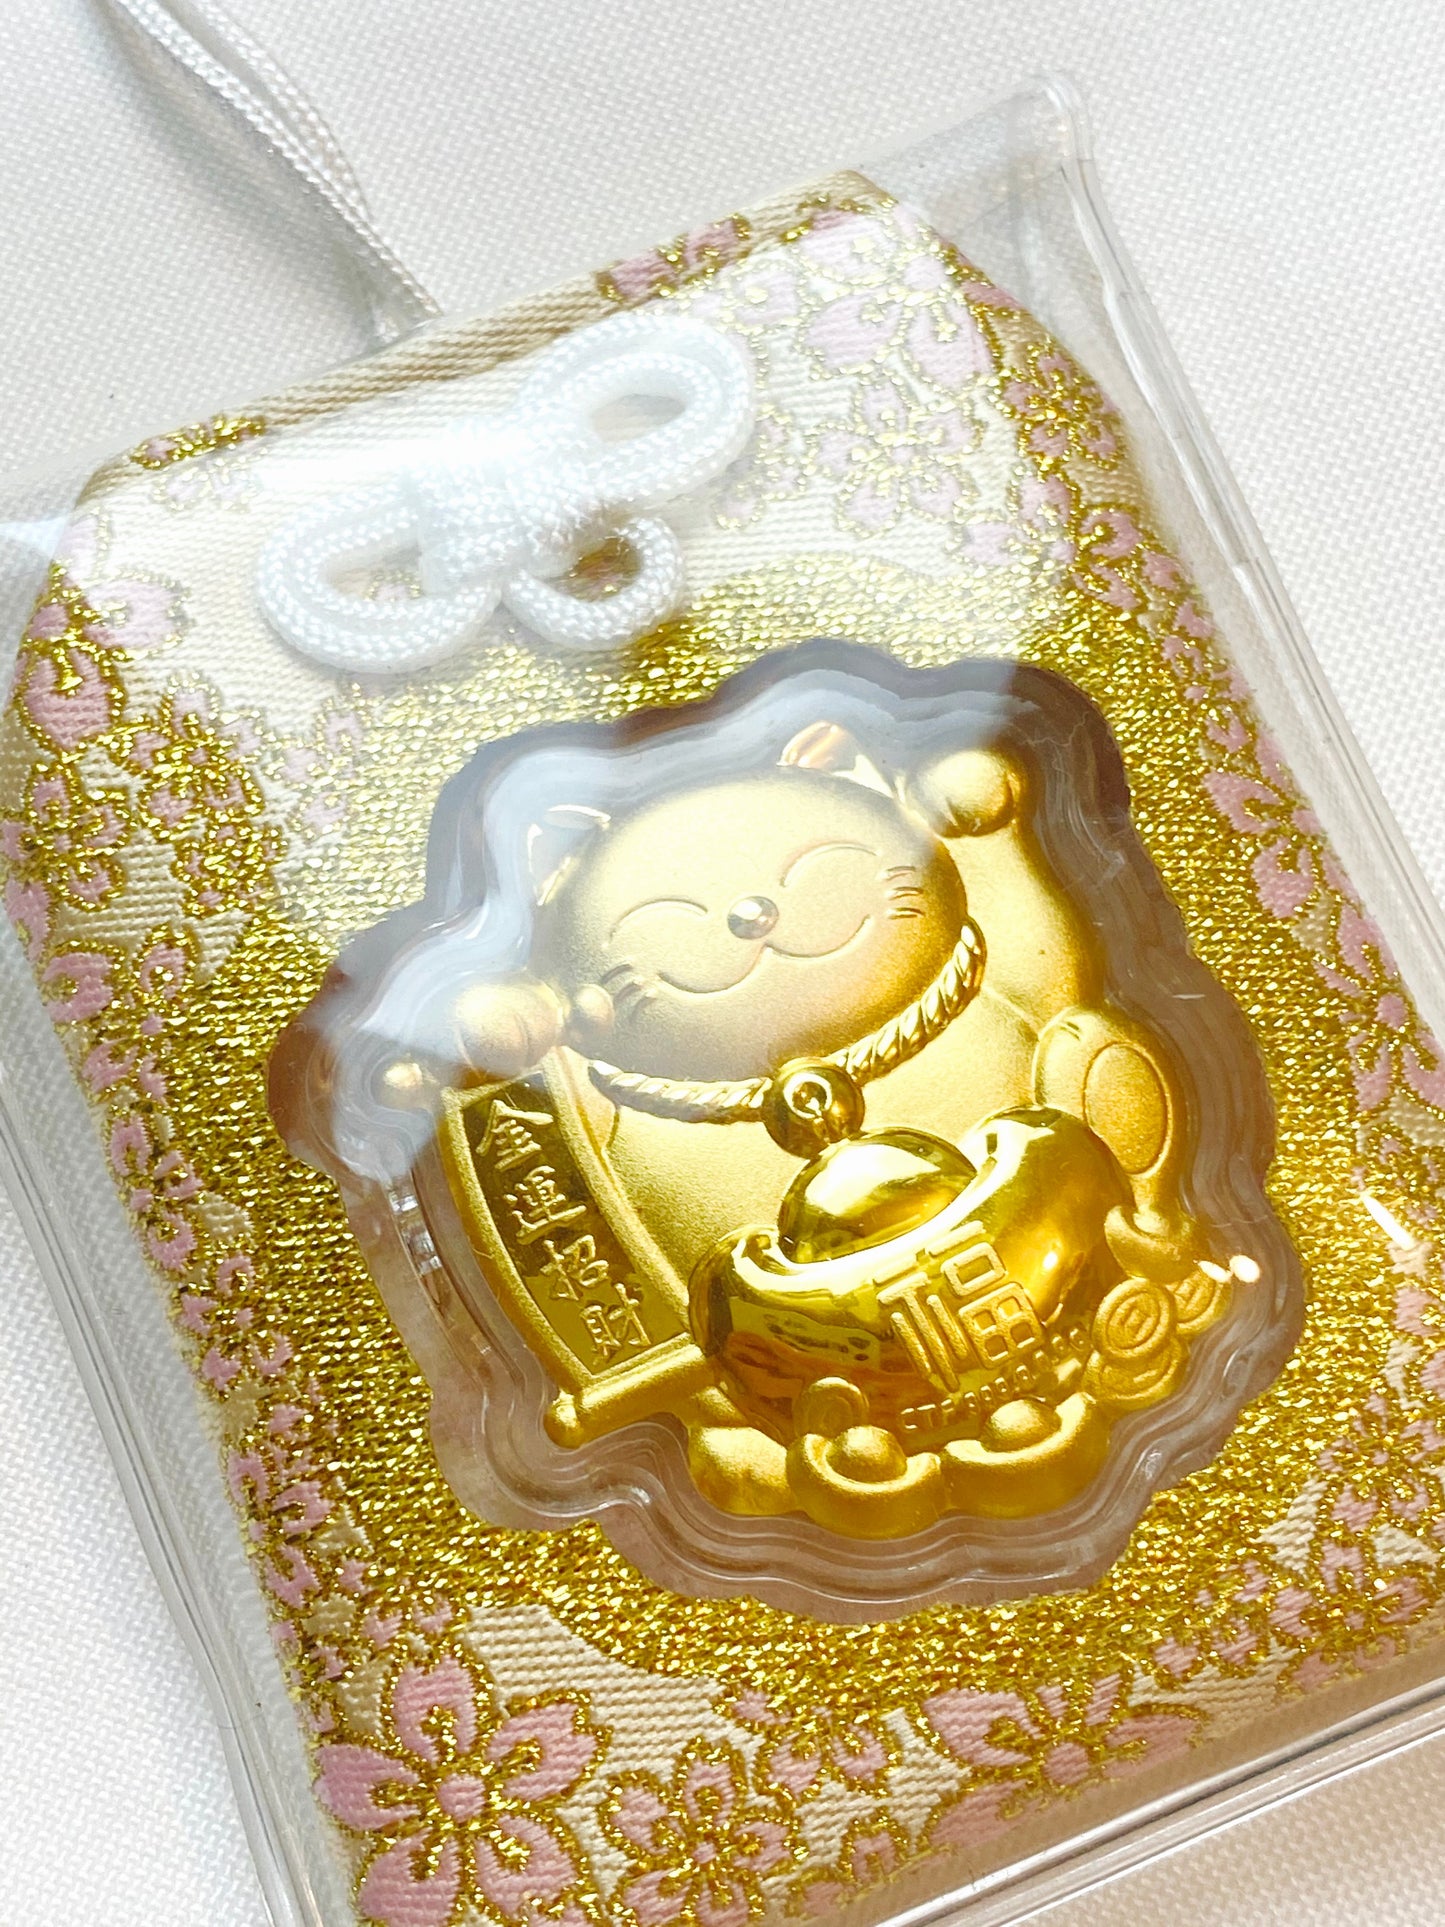 Chow Tai Fook Limited Pure Gold Omamori - Wish Guard Charm Amulet